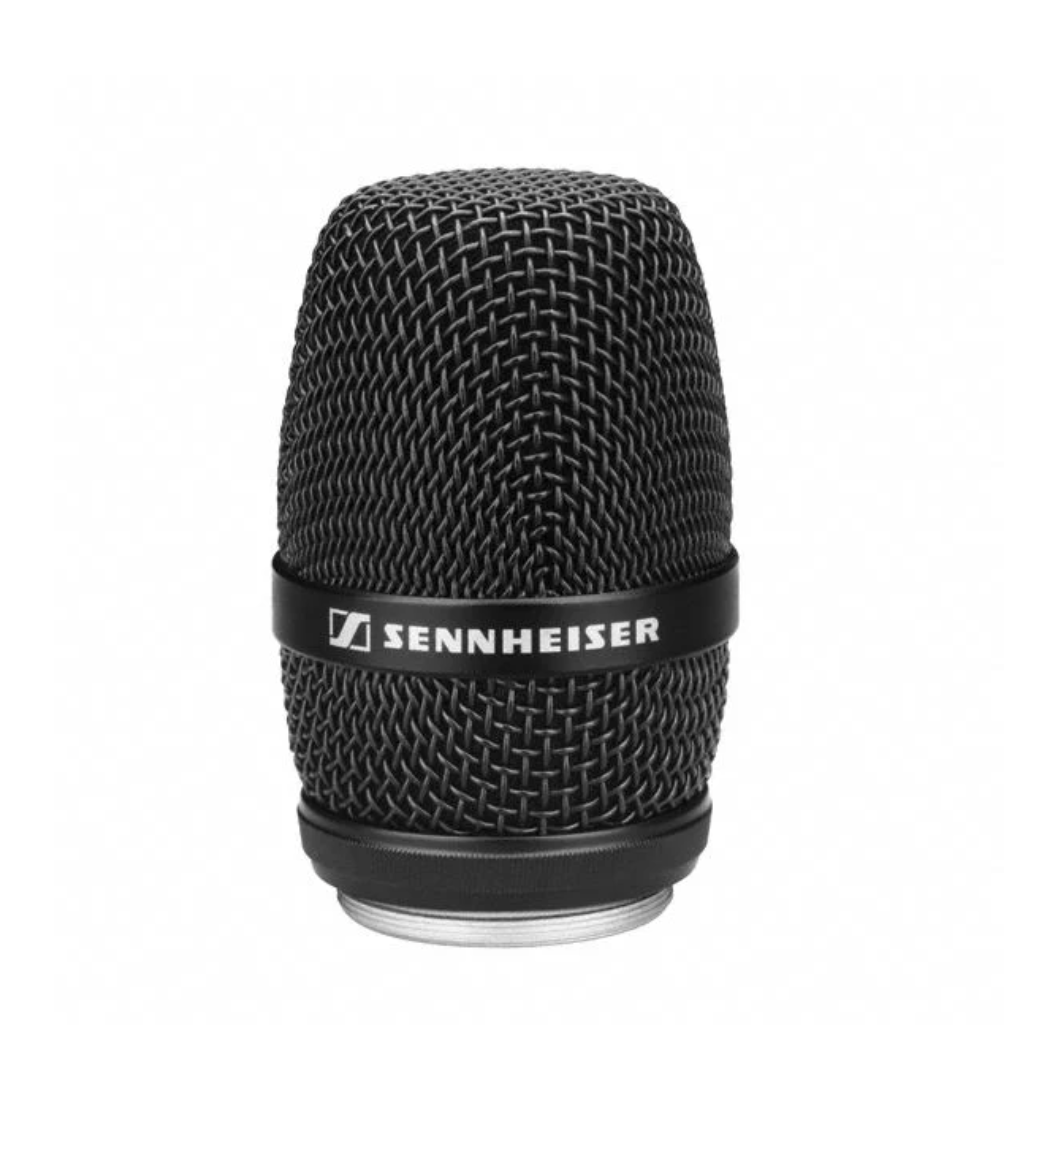 Sennheiser MME 865-1 BK Supercardioid Condenser Microphone Capsule